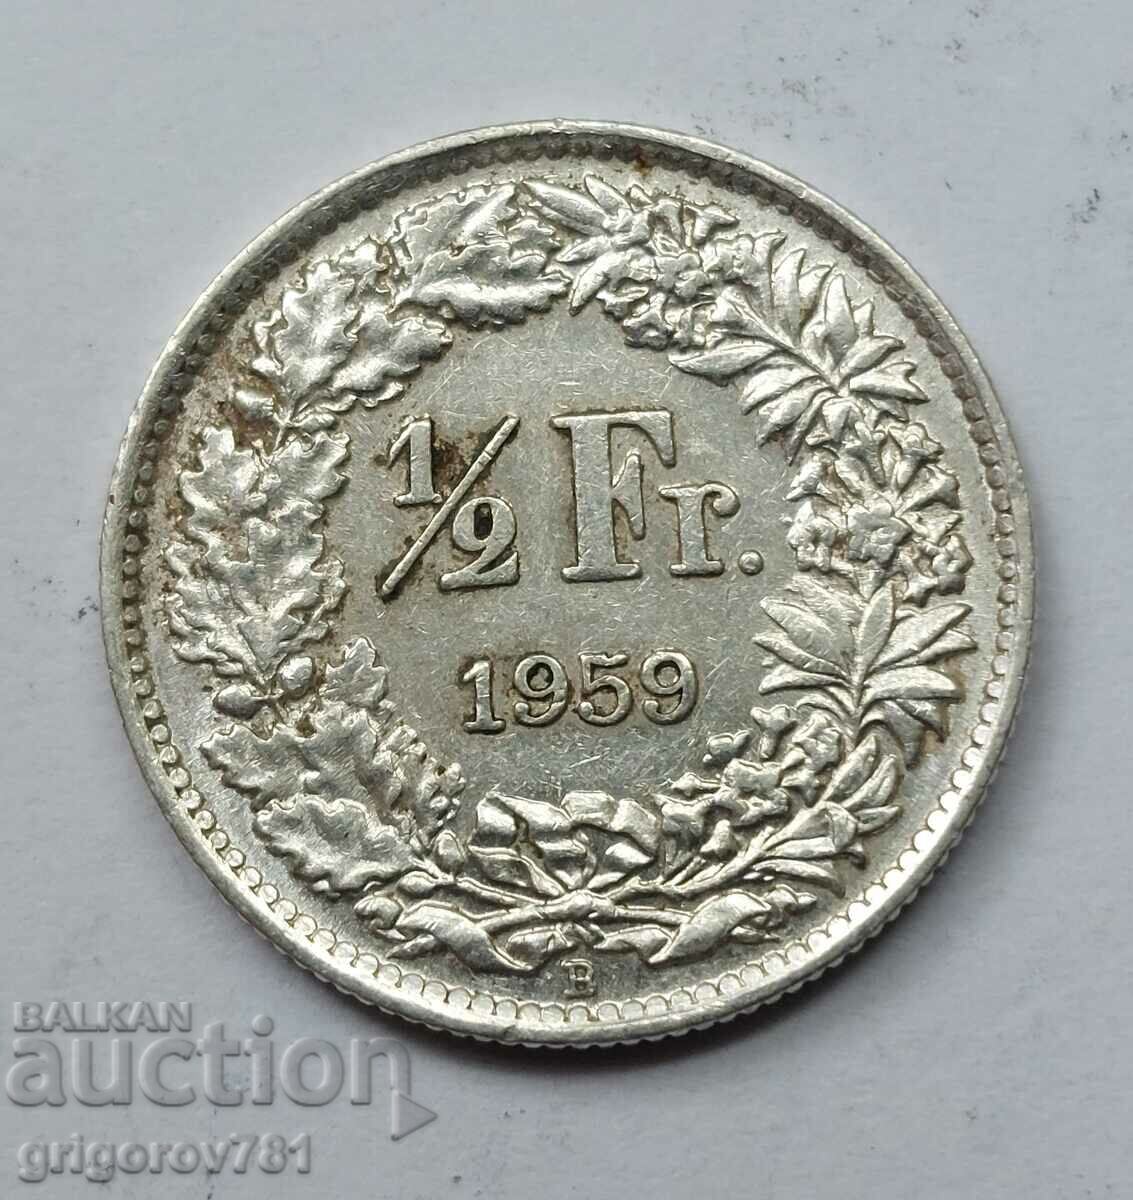 1/2 Franc Argint Elveția 1959 B - Monedă de argint #18